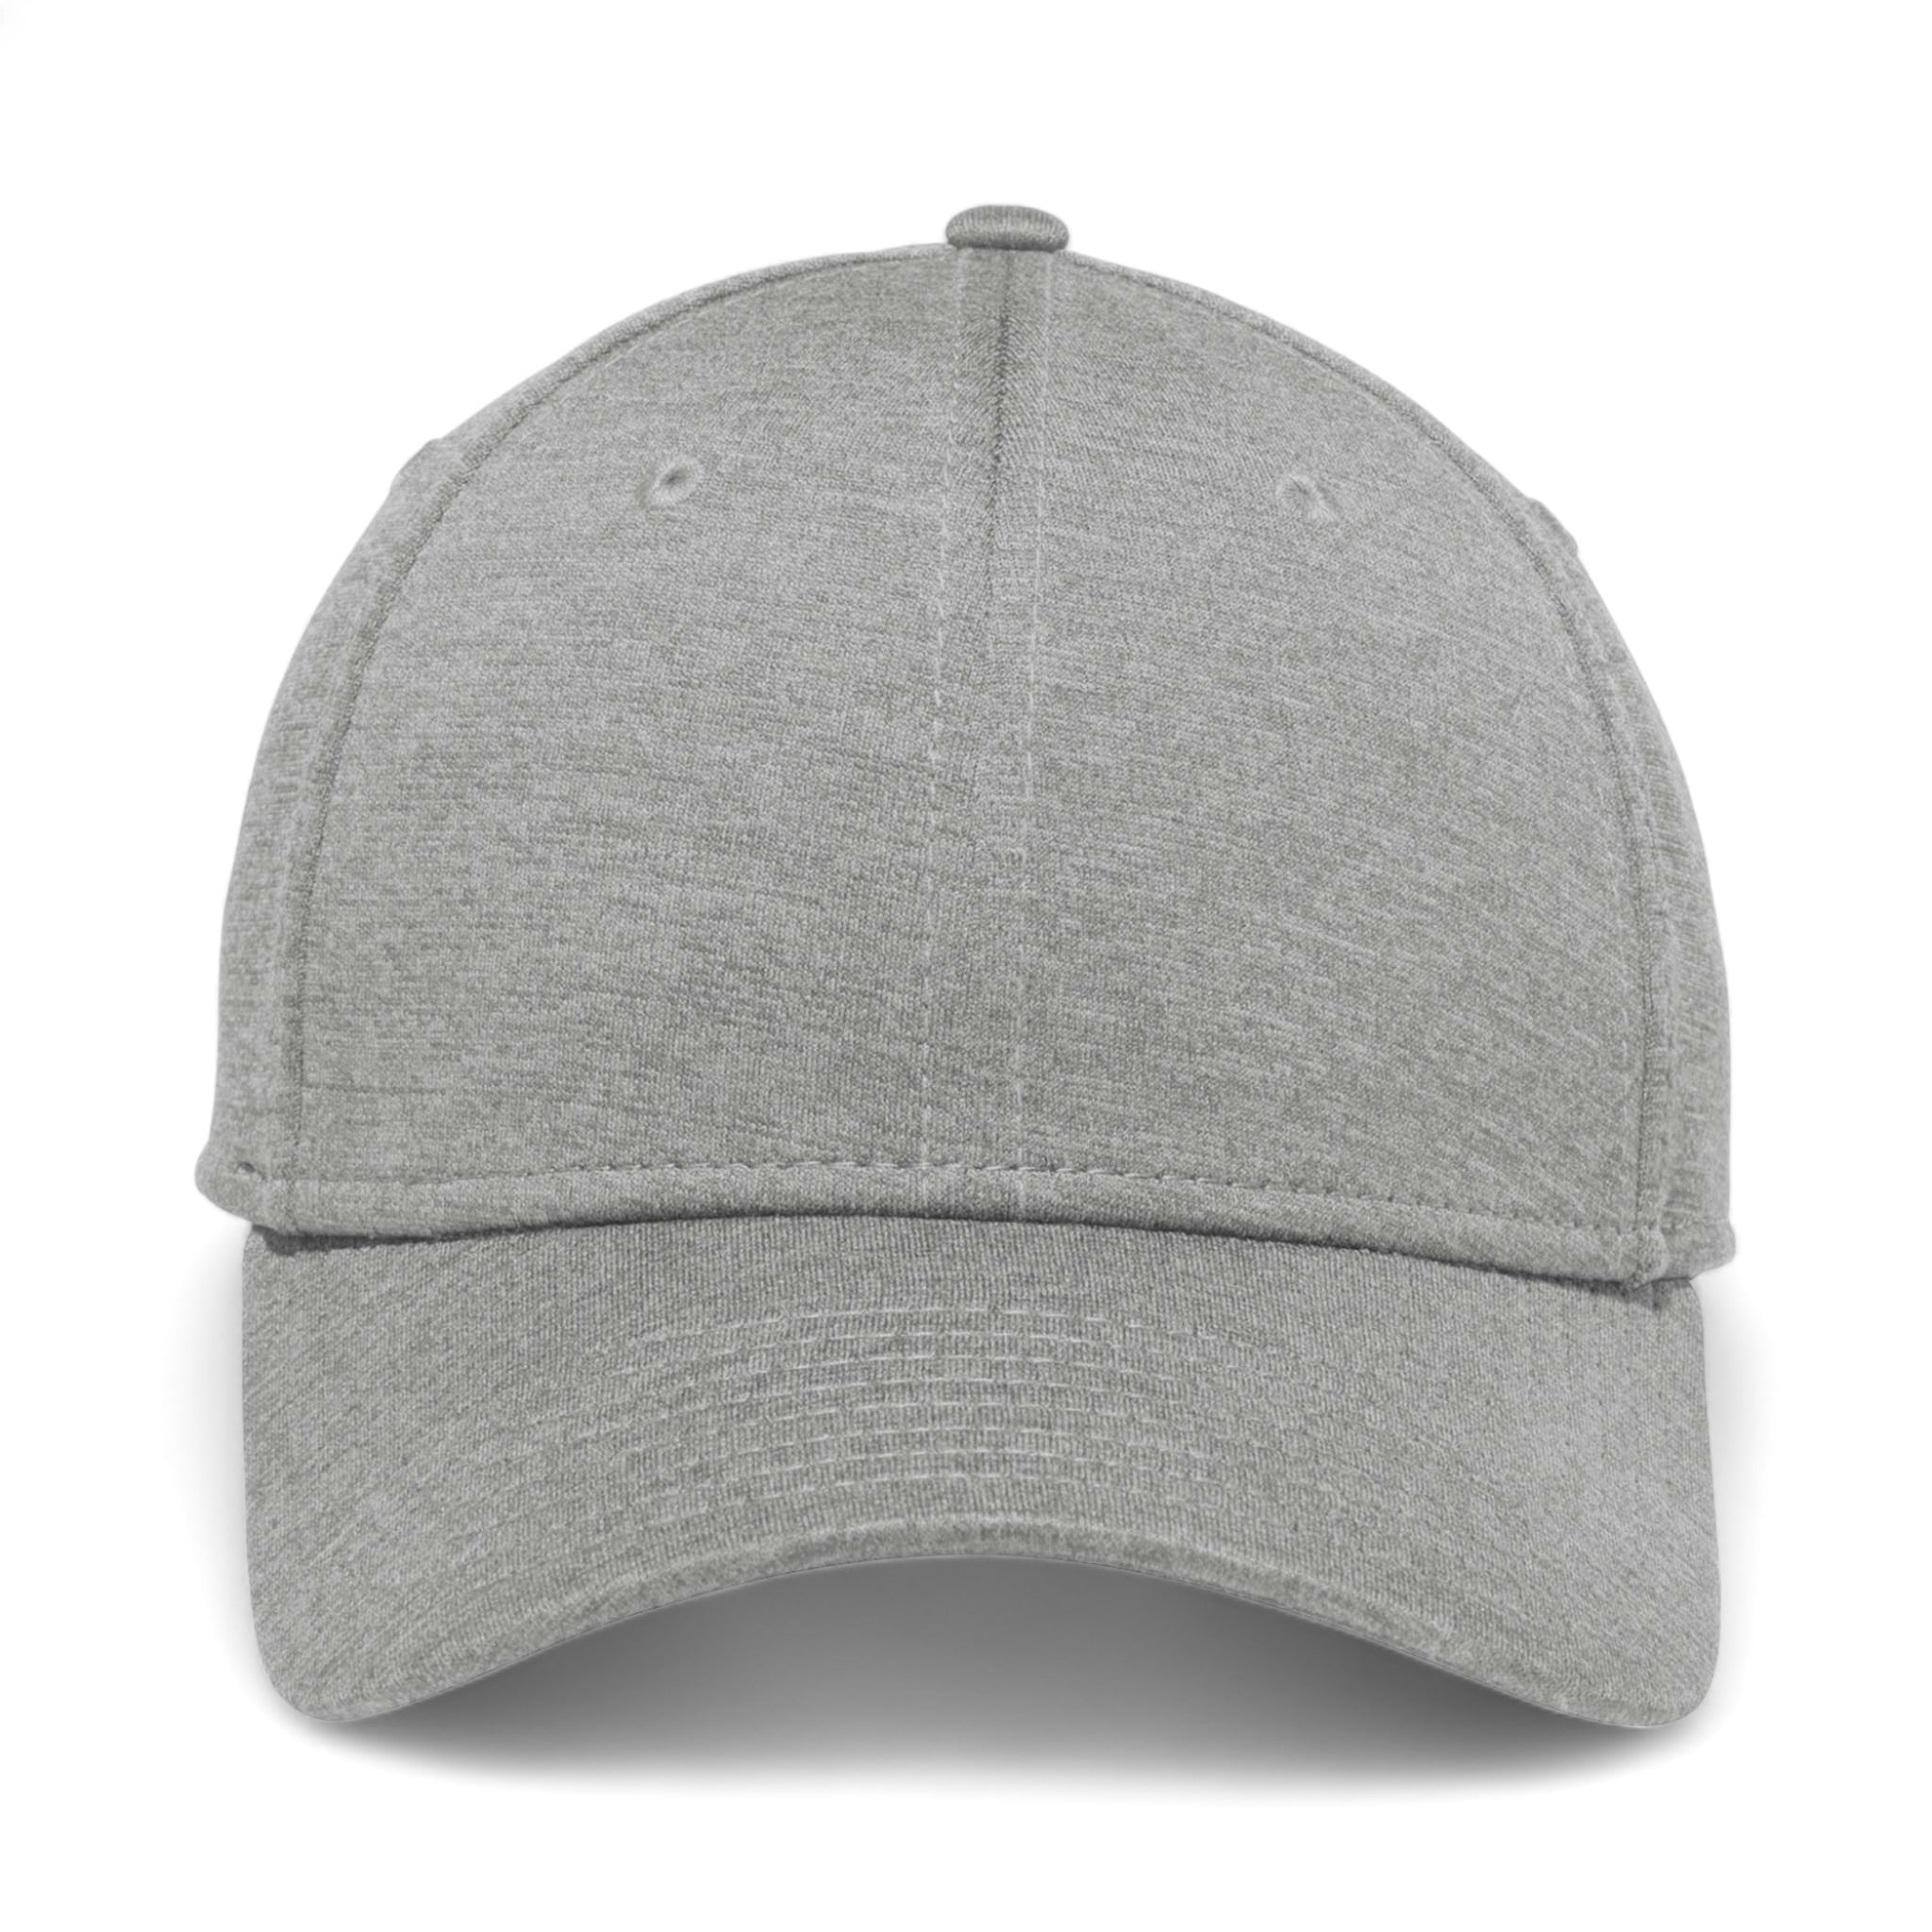 Front view of New Era NE703 custom hat in grey shadow heather